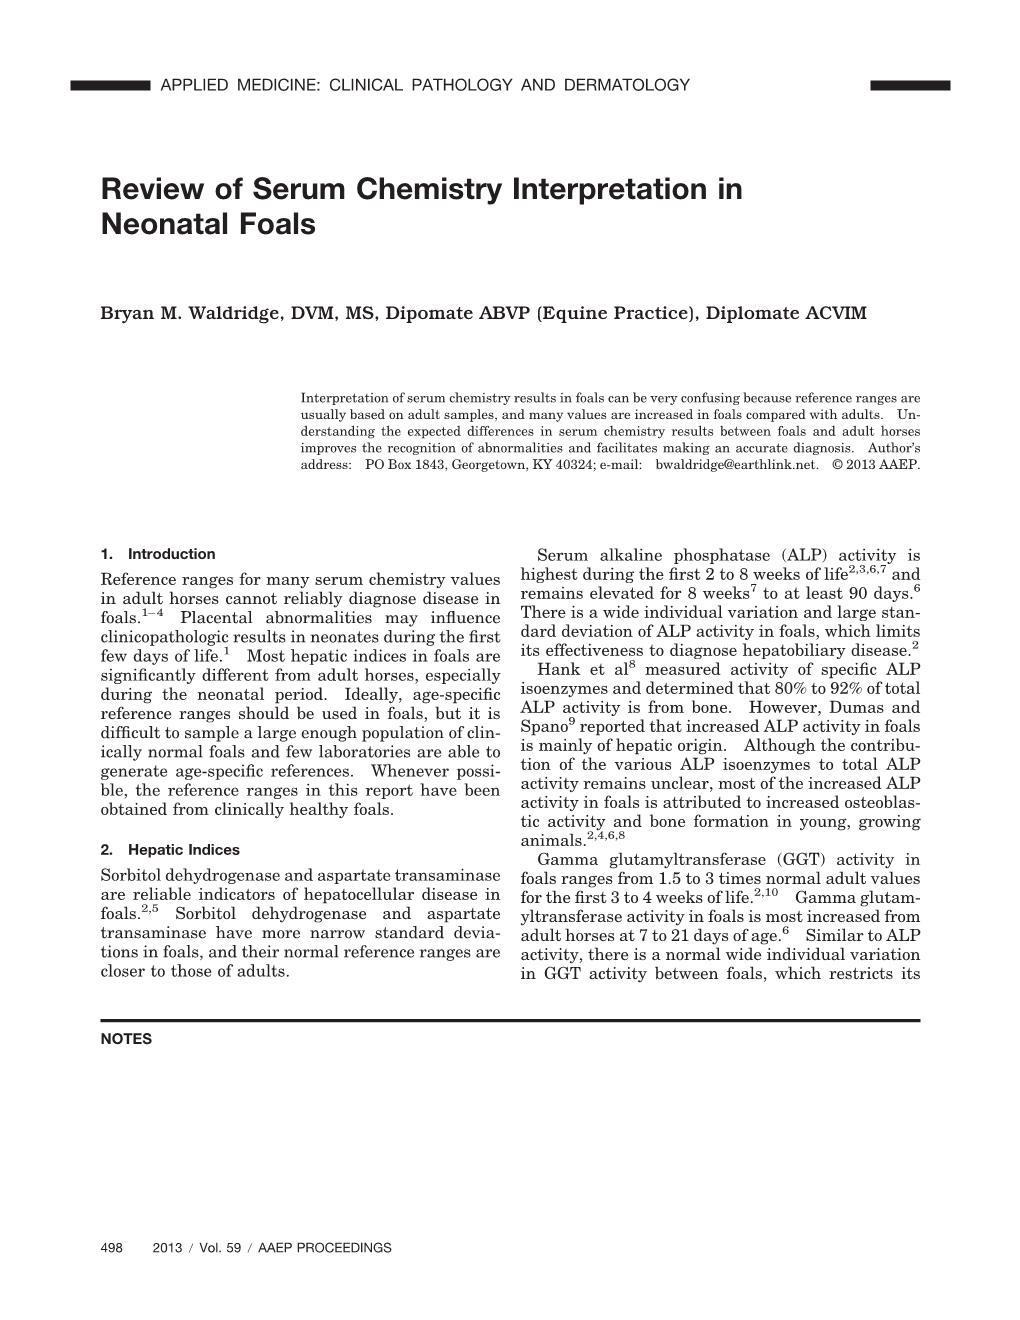 Review of Serum Chemistry Interpretation in Neonatal Foals